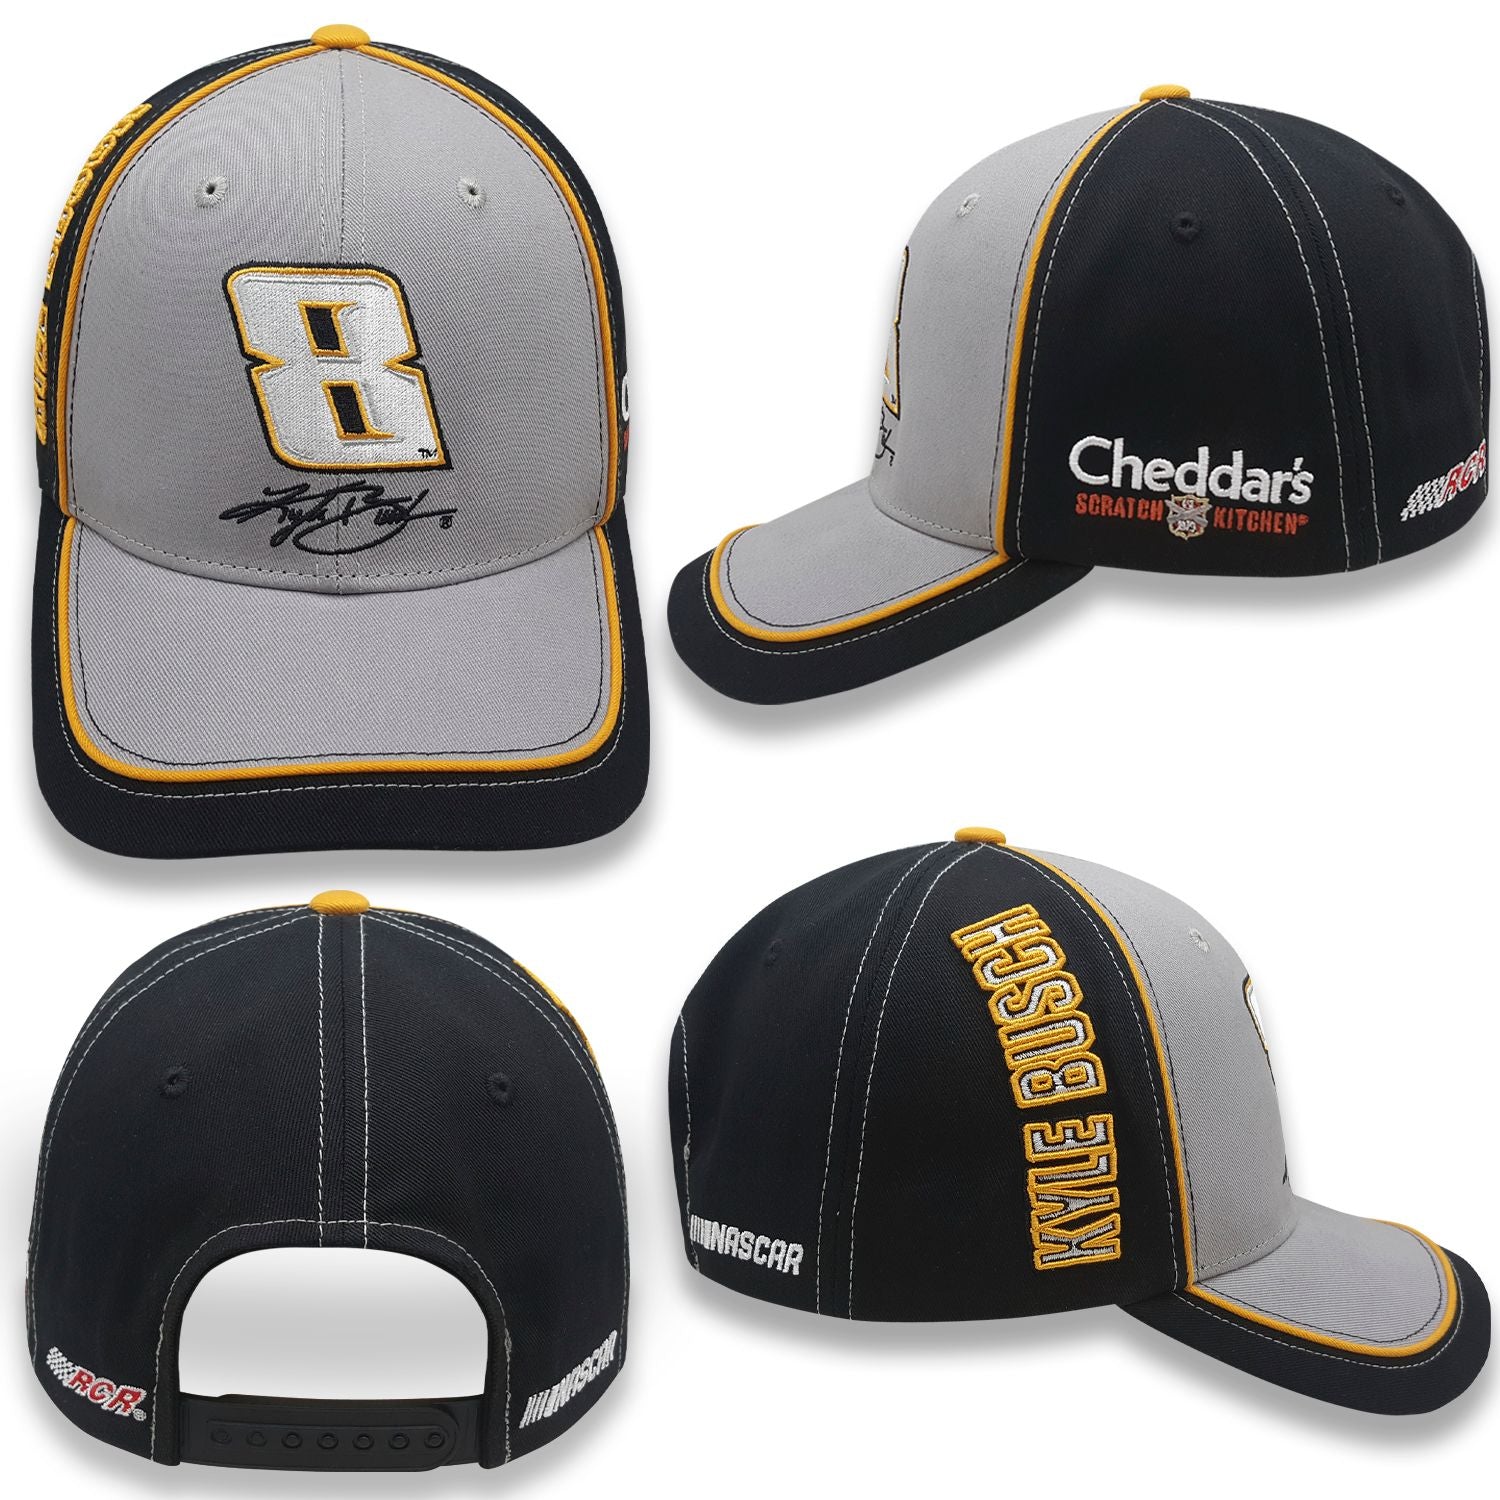 Kyle Busch #8 Cheddar's Accelerator Hat